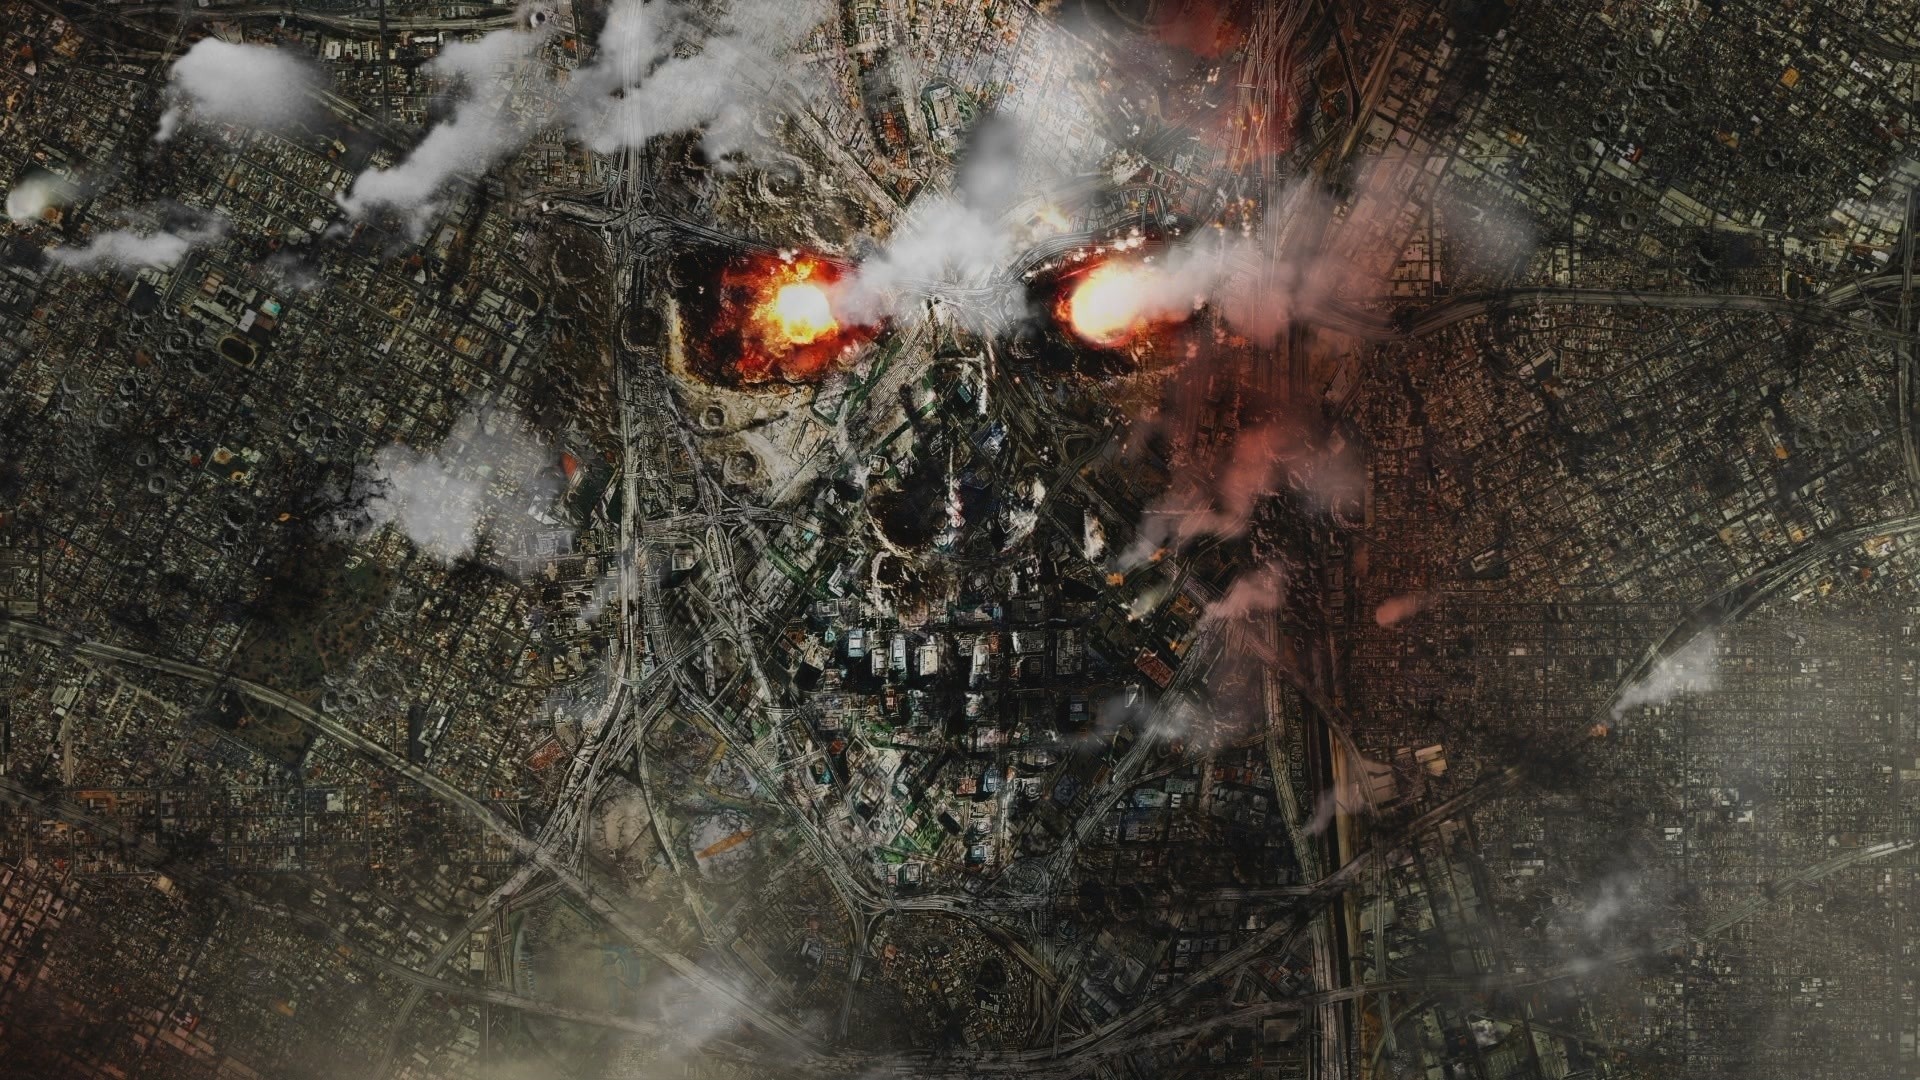 The Terminator HD Wallpaper Image All